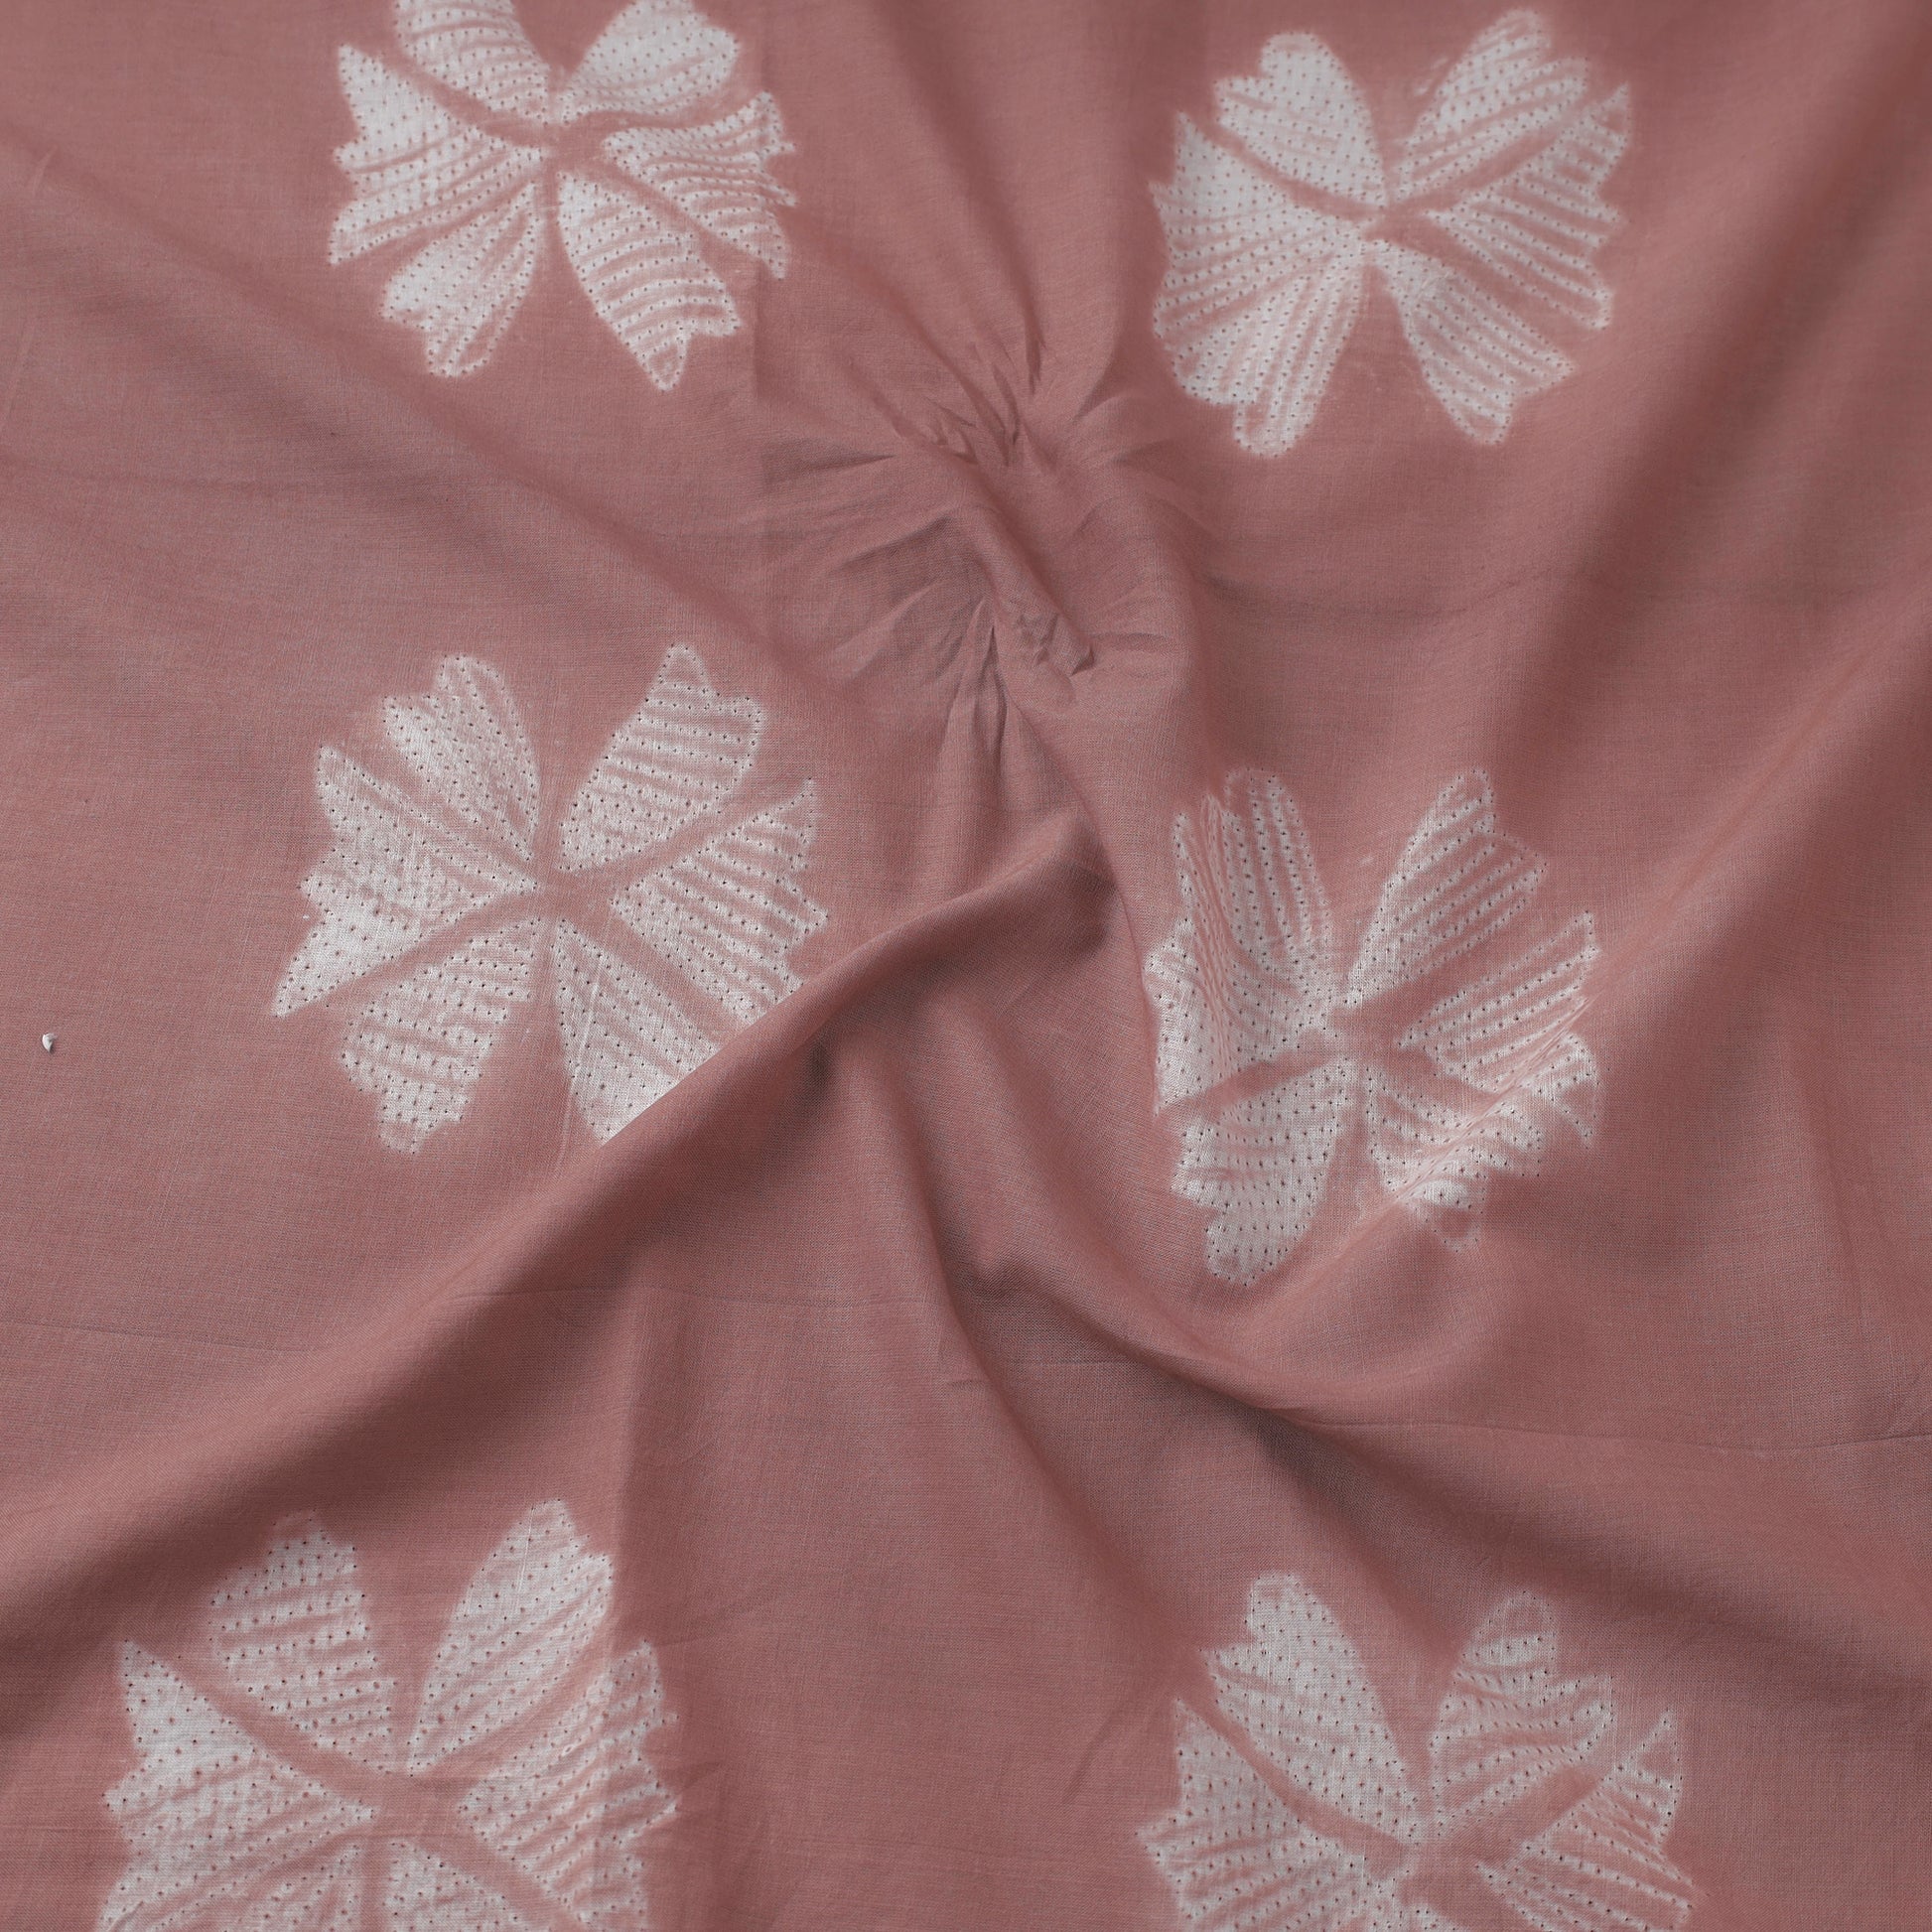 Shibori Tie-Dye  Fabric